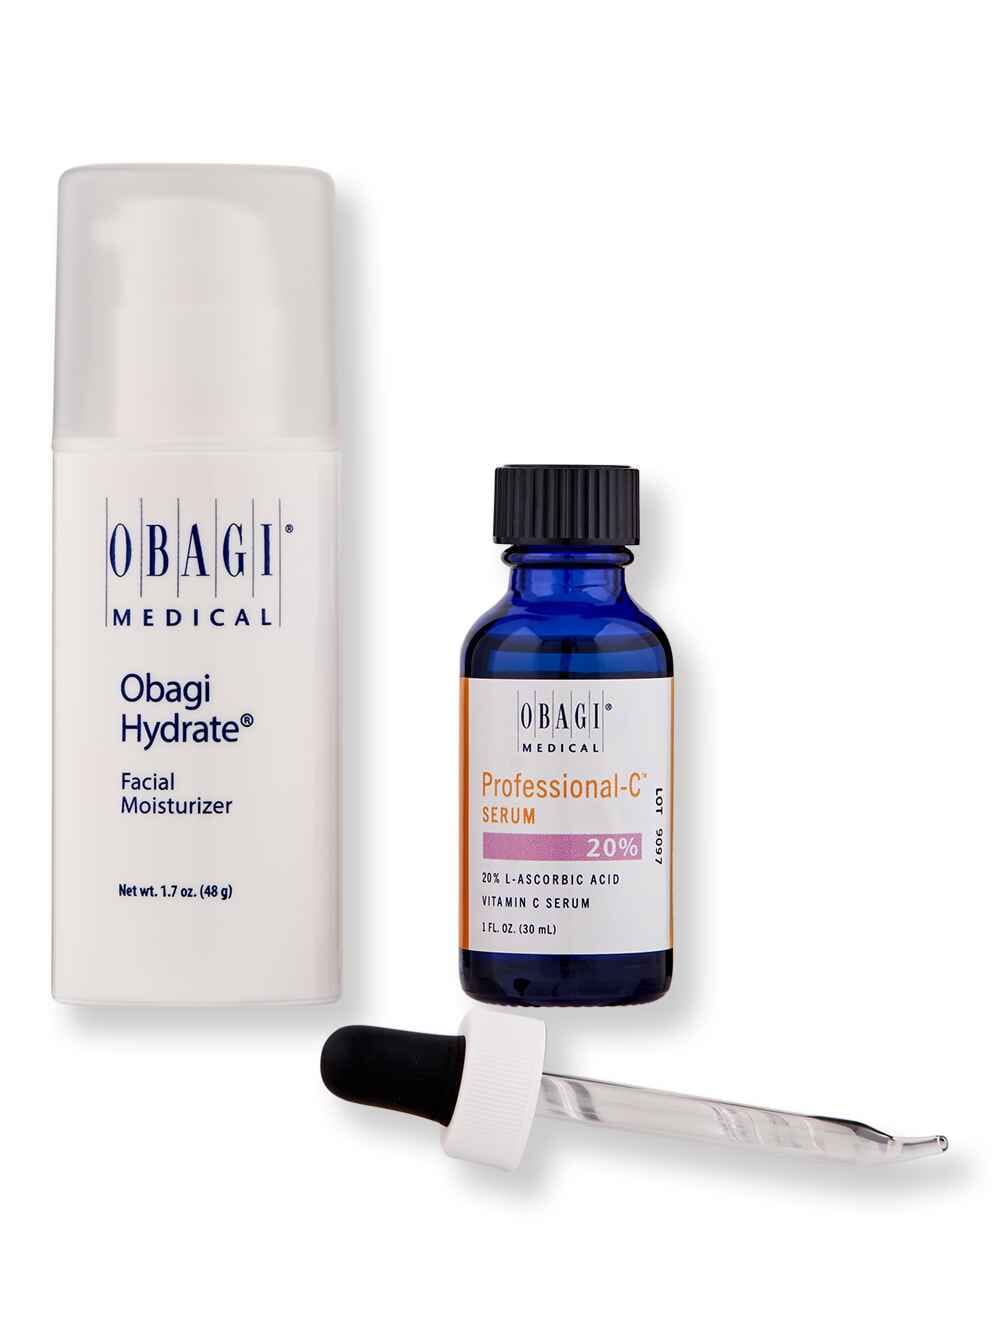 Obagi Obagi Hydrate Facial Moisturizer 1.7oz & Professional-C Serum 20% 1oz Face Moisturizers 